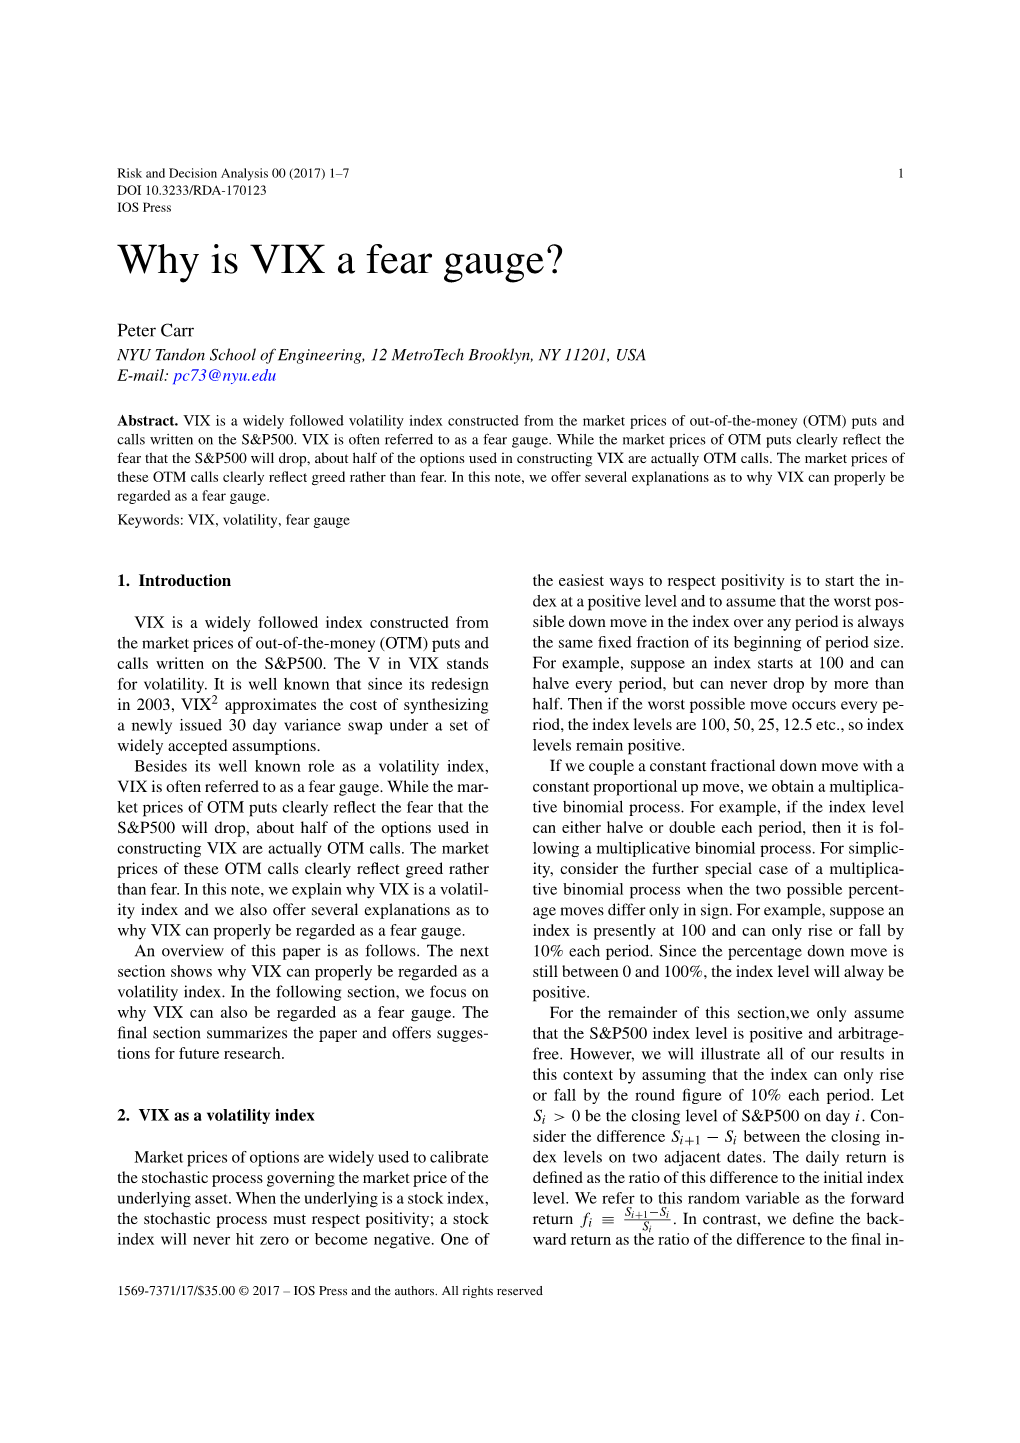 Why Is VIX a Fear Gauge?